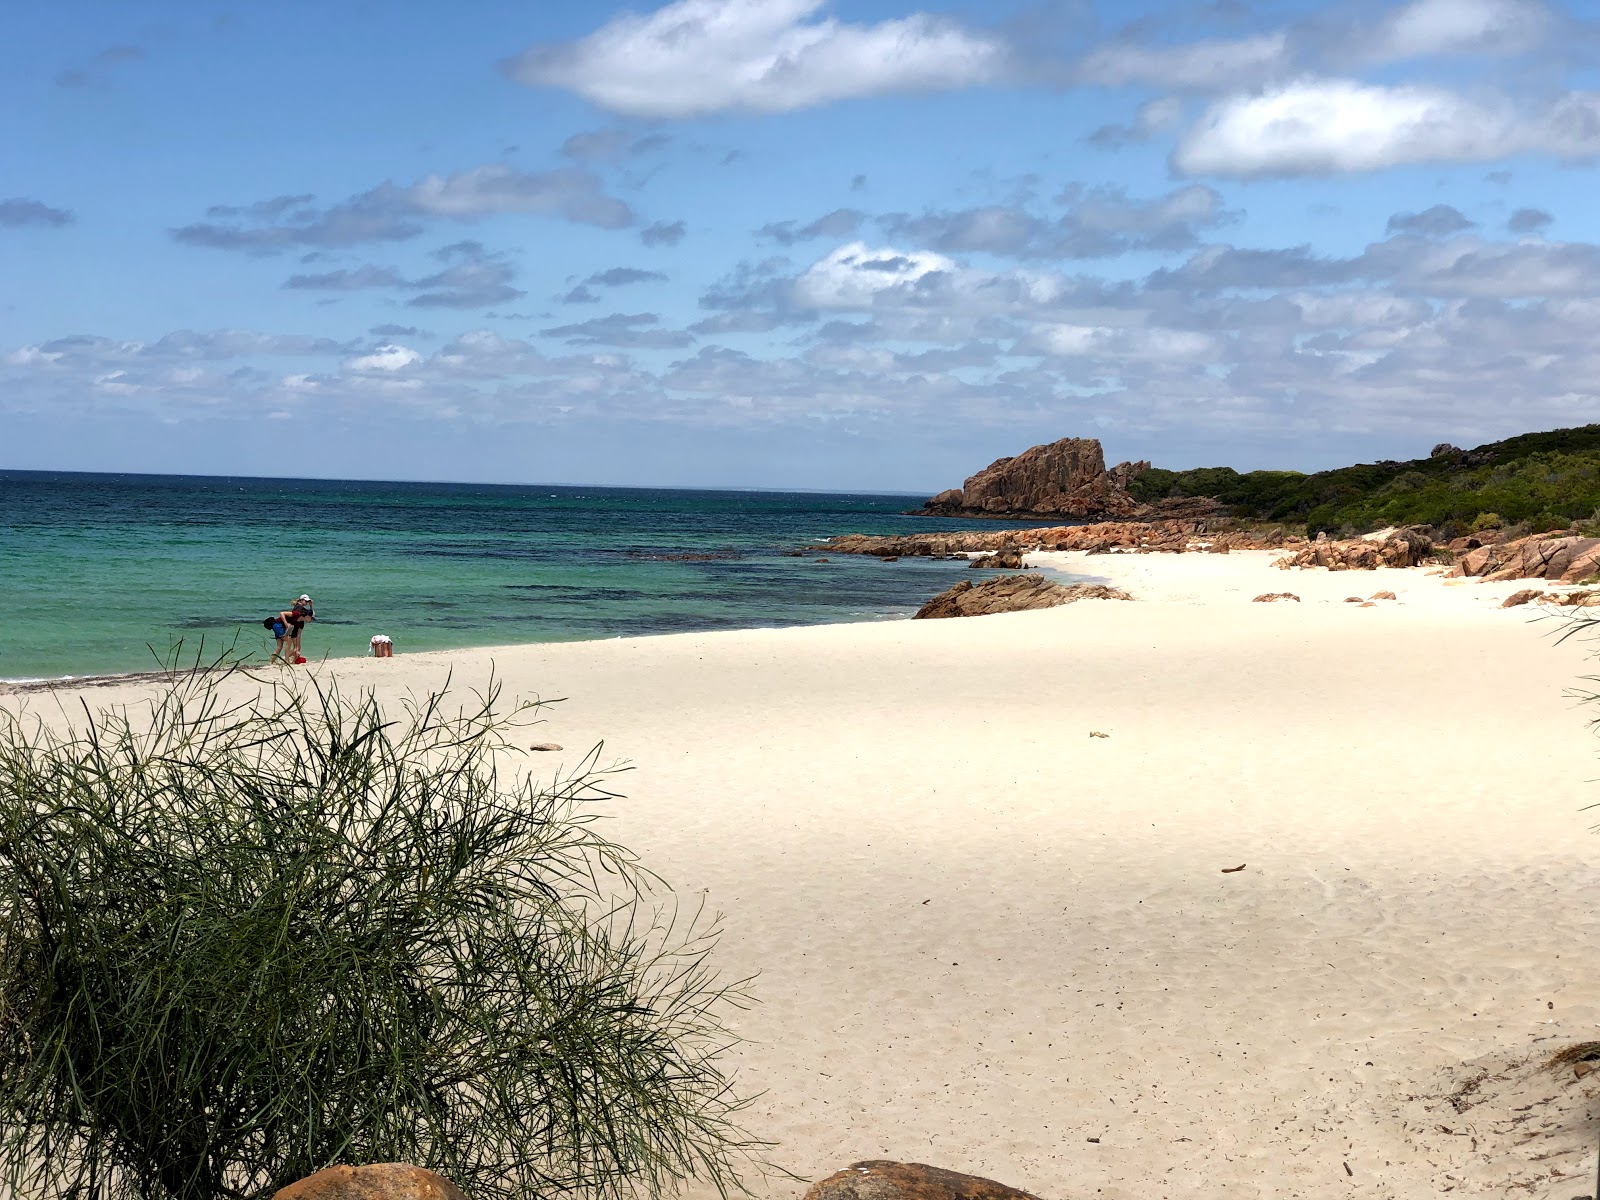 Foto de Castle Rock Beach - lugar popular entre os apreciadores de relaxamento